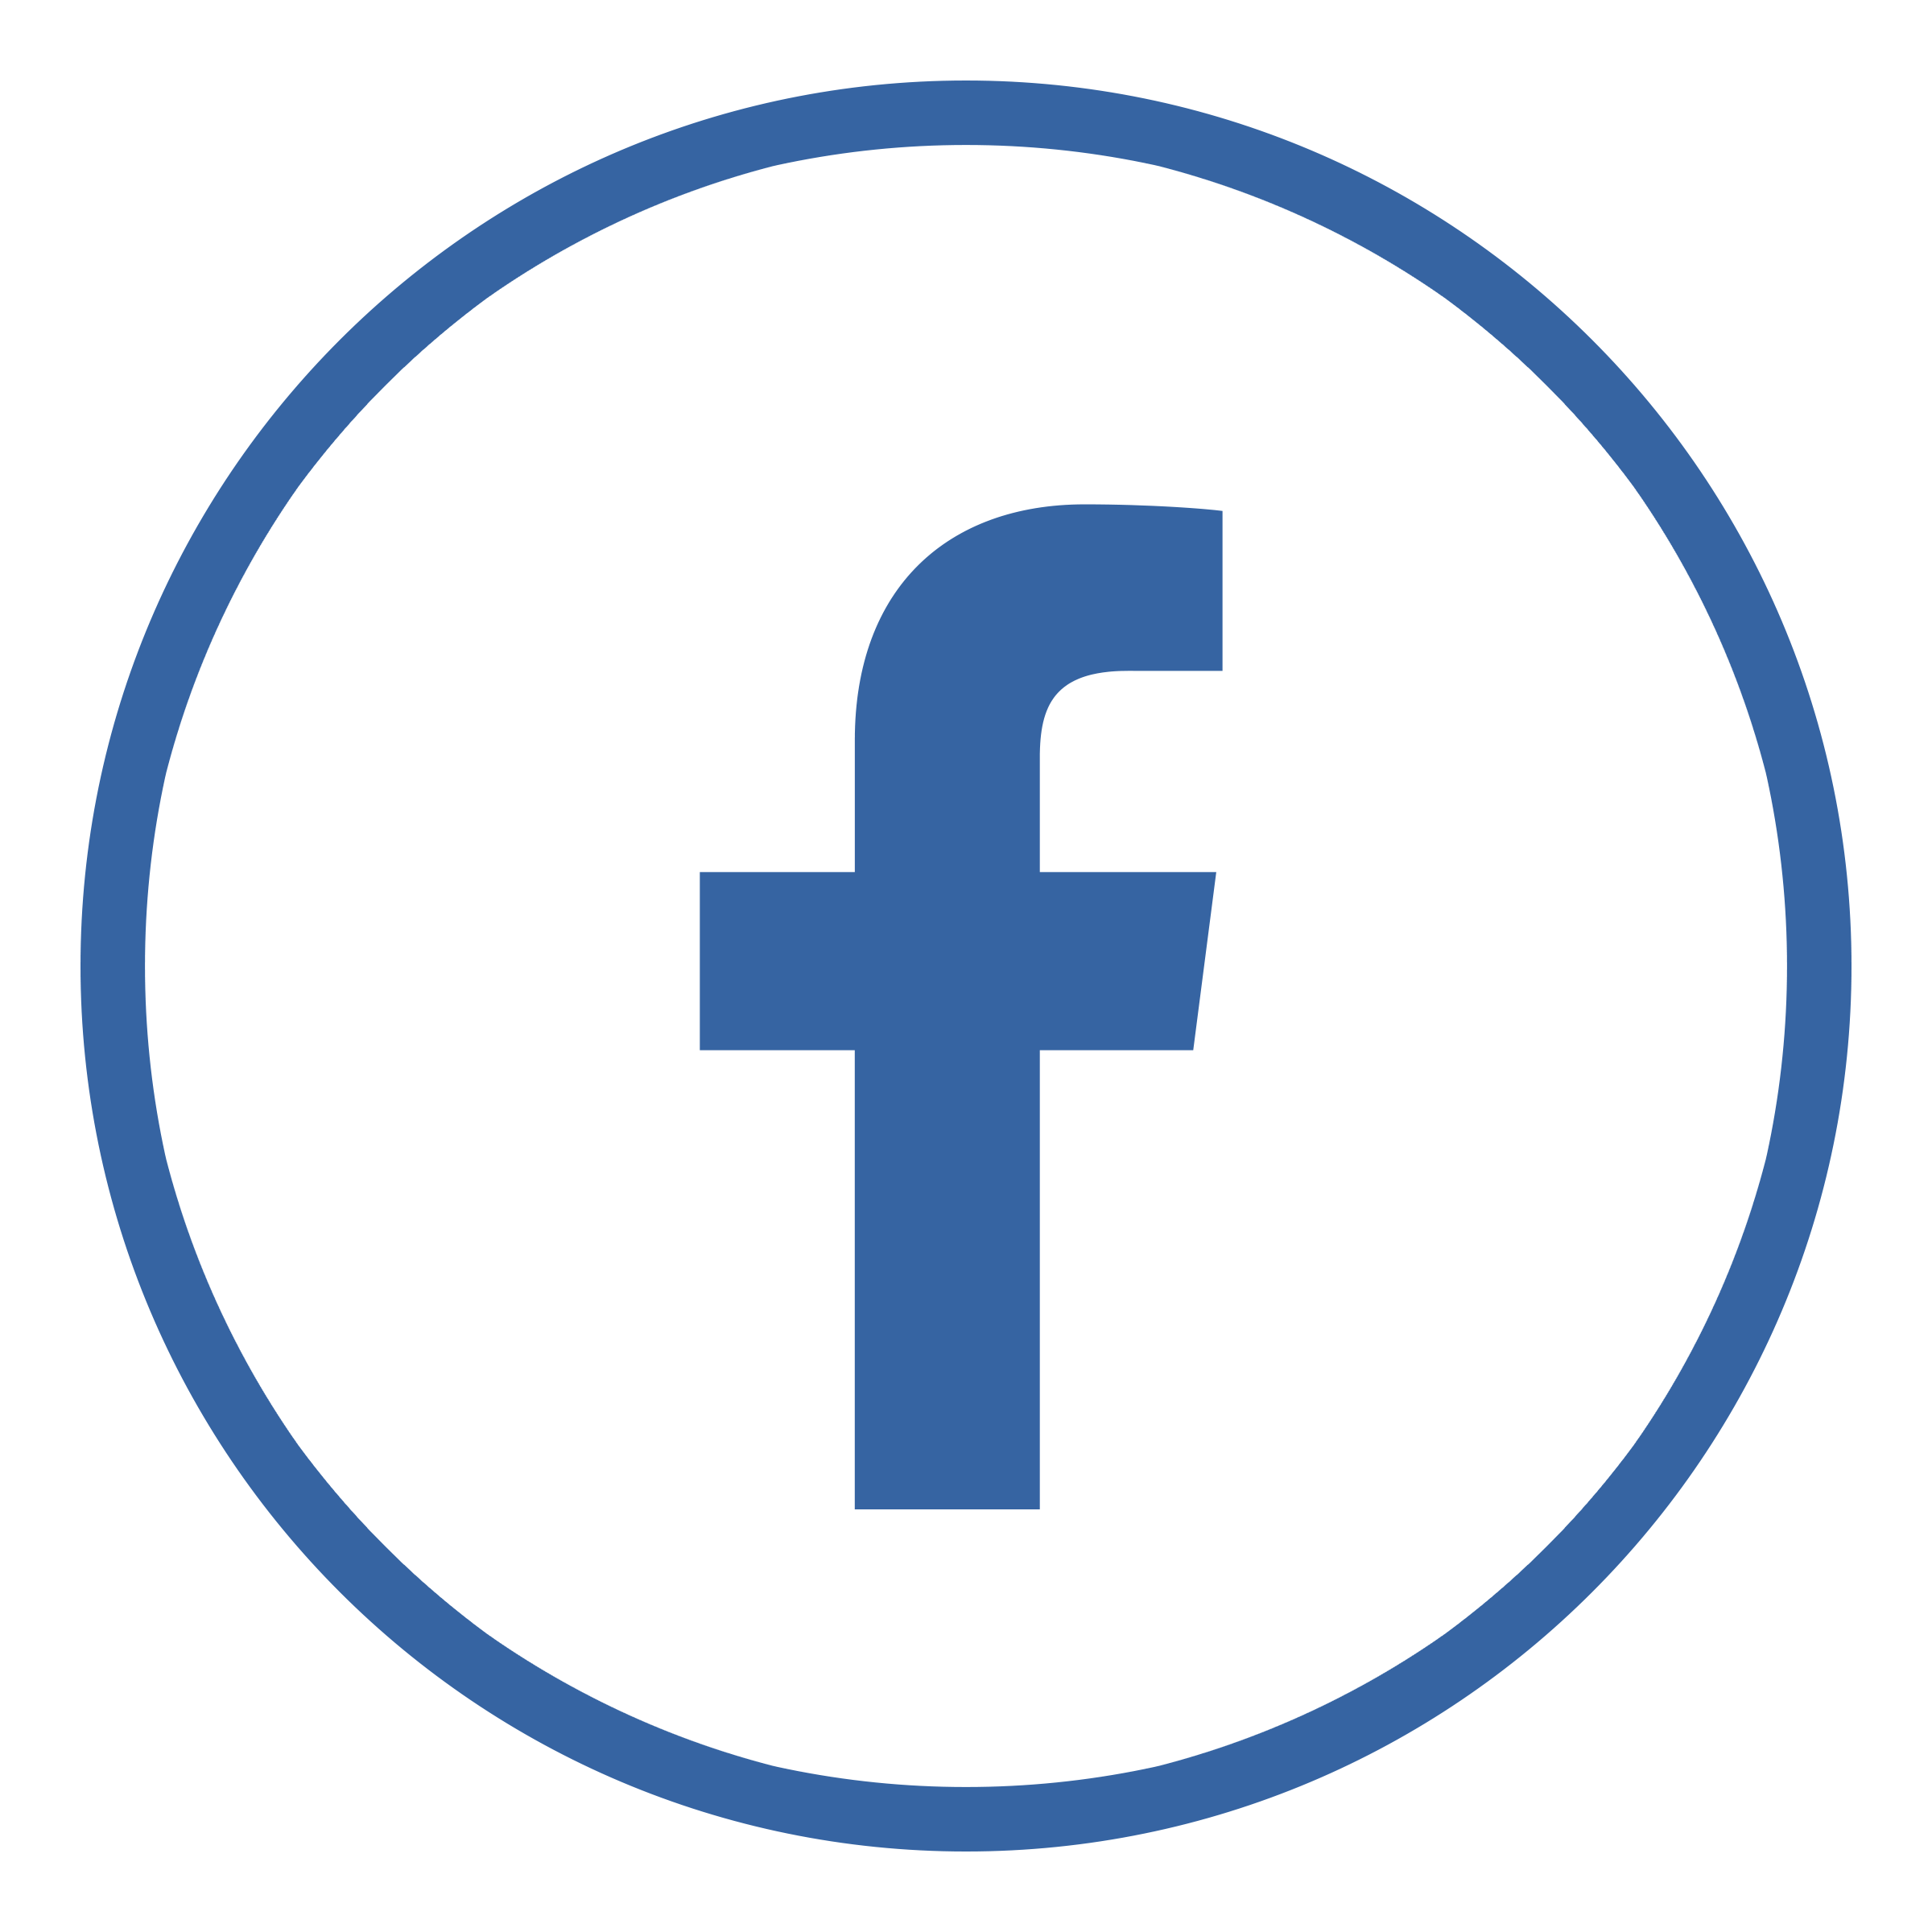 Logo Facebook Circle Png Pictures #46264.